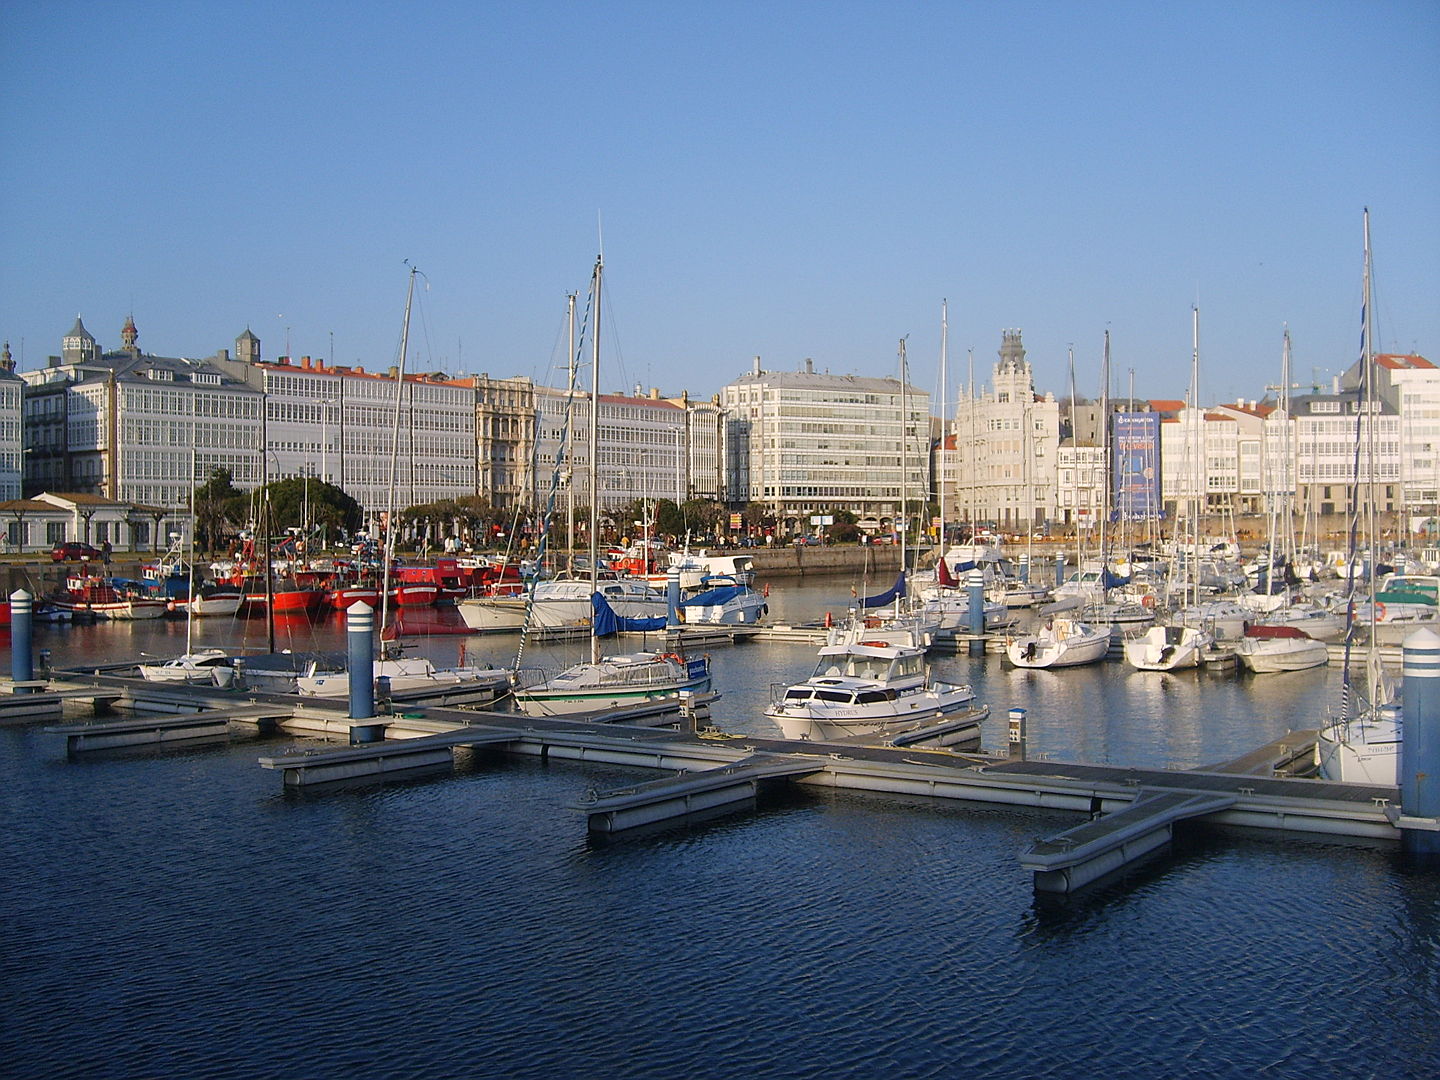  La Coruña, España
- Port_La_Coruña.JPG